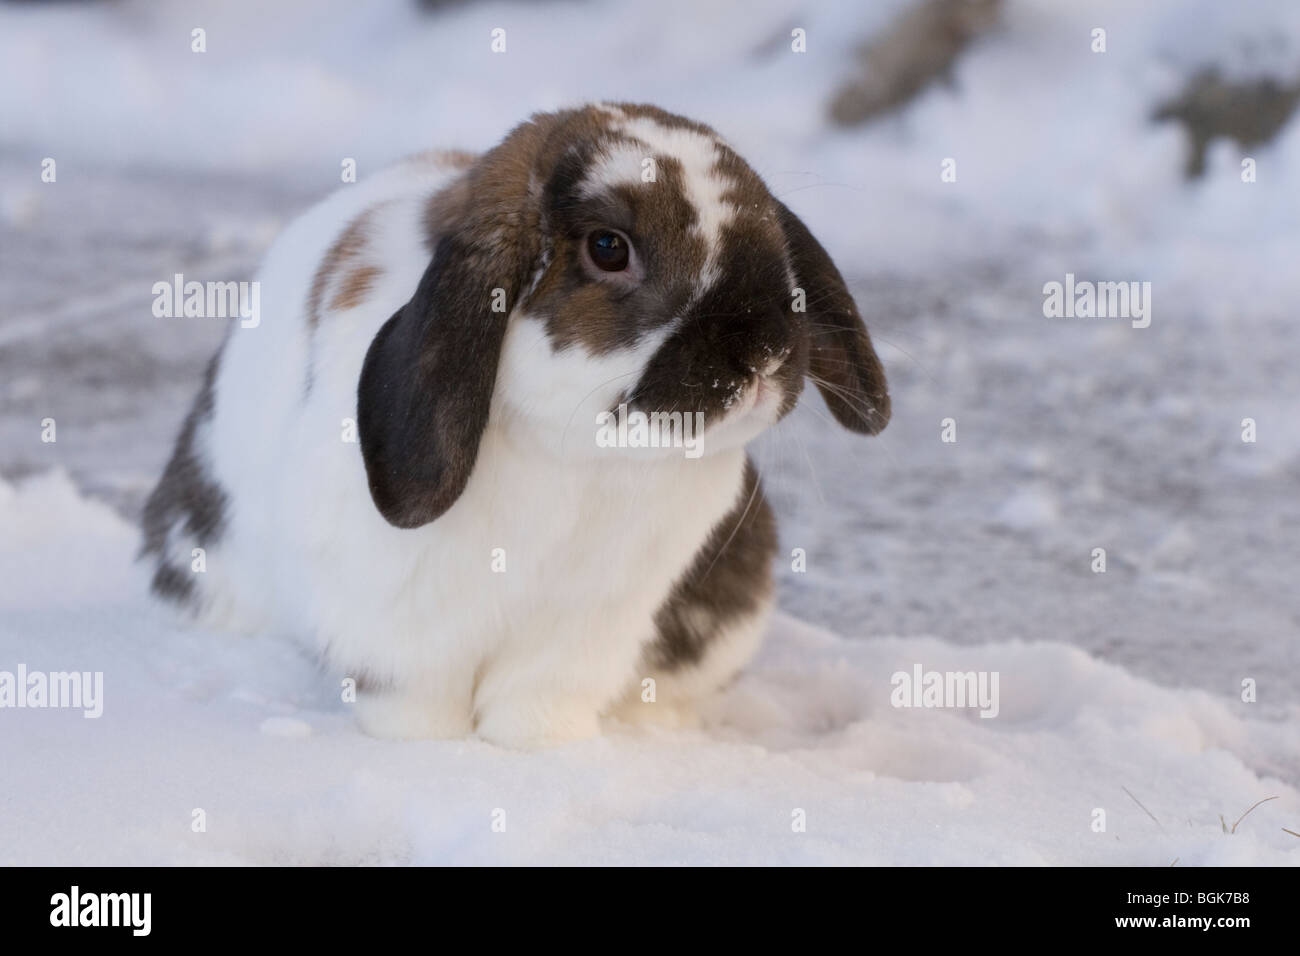 Holland Lop pet dwarf rabbit outdoors in winter beside a shoveled walkway Stock Photo